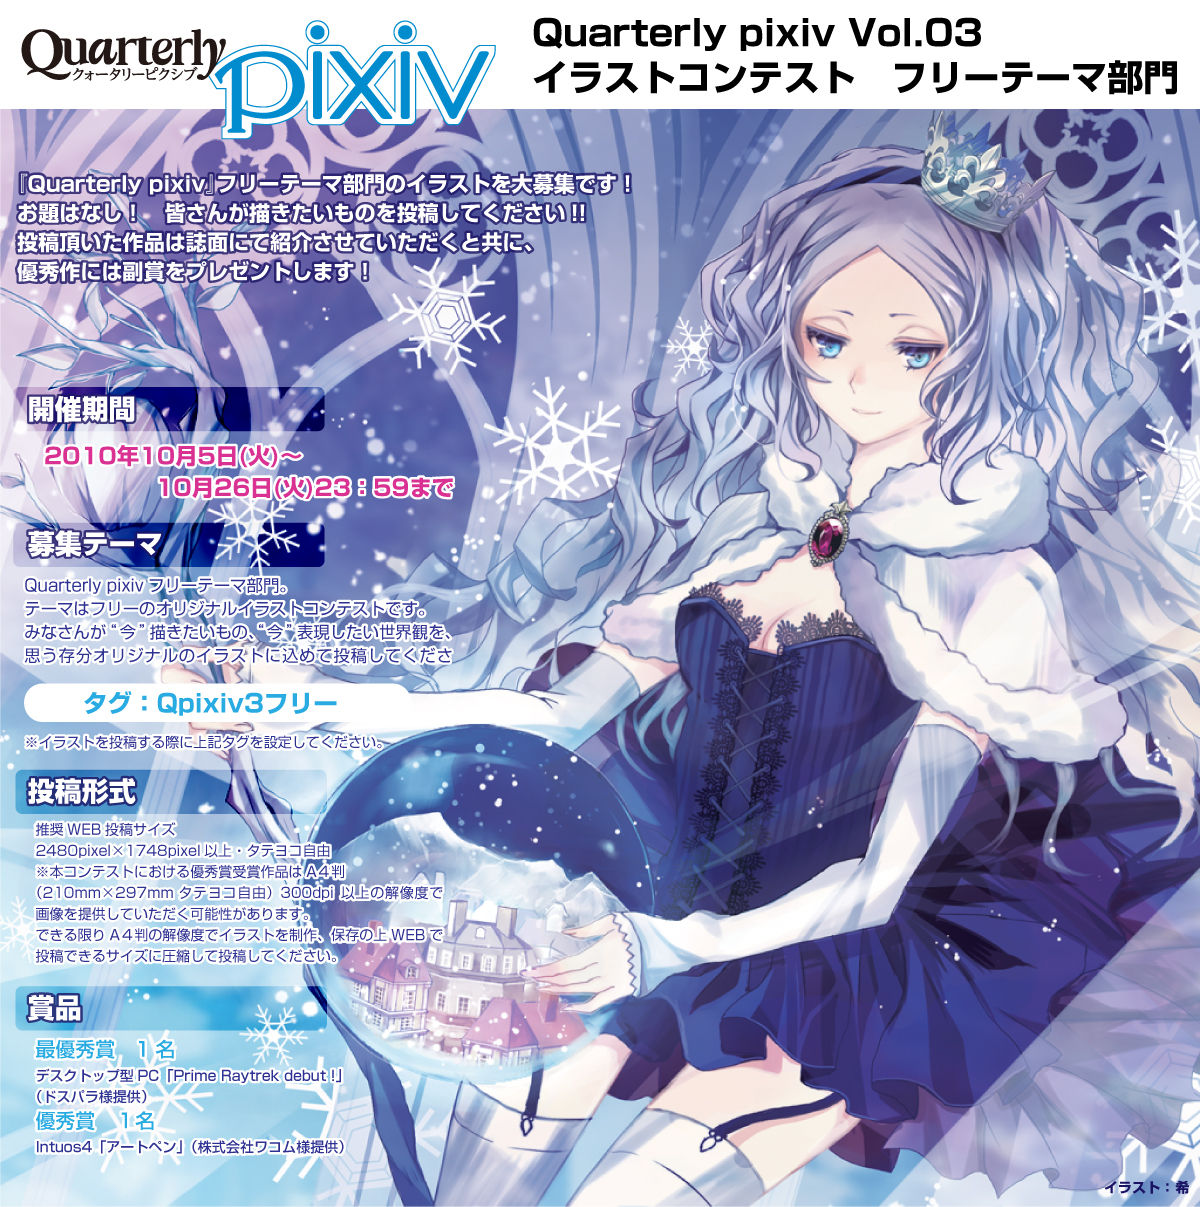 Quarterly Pixiv Vol 03 イラストコンテスト開催のお知らせ Pixiv開発者ブログ